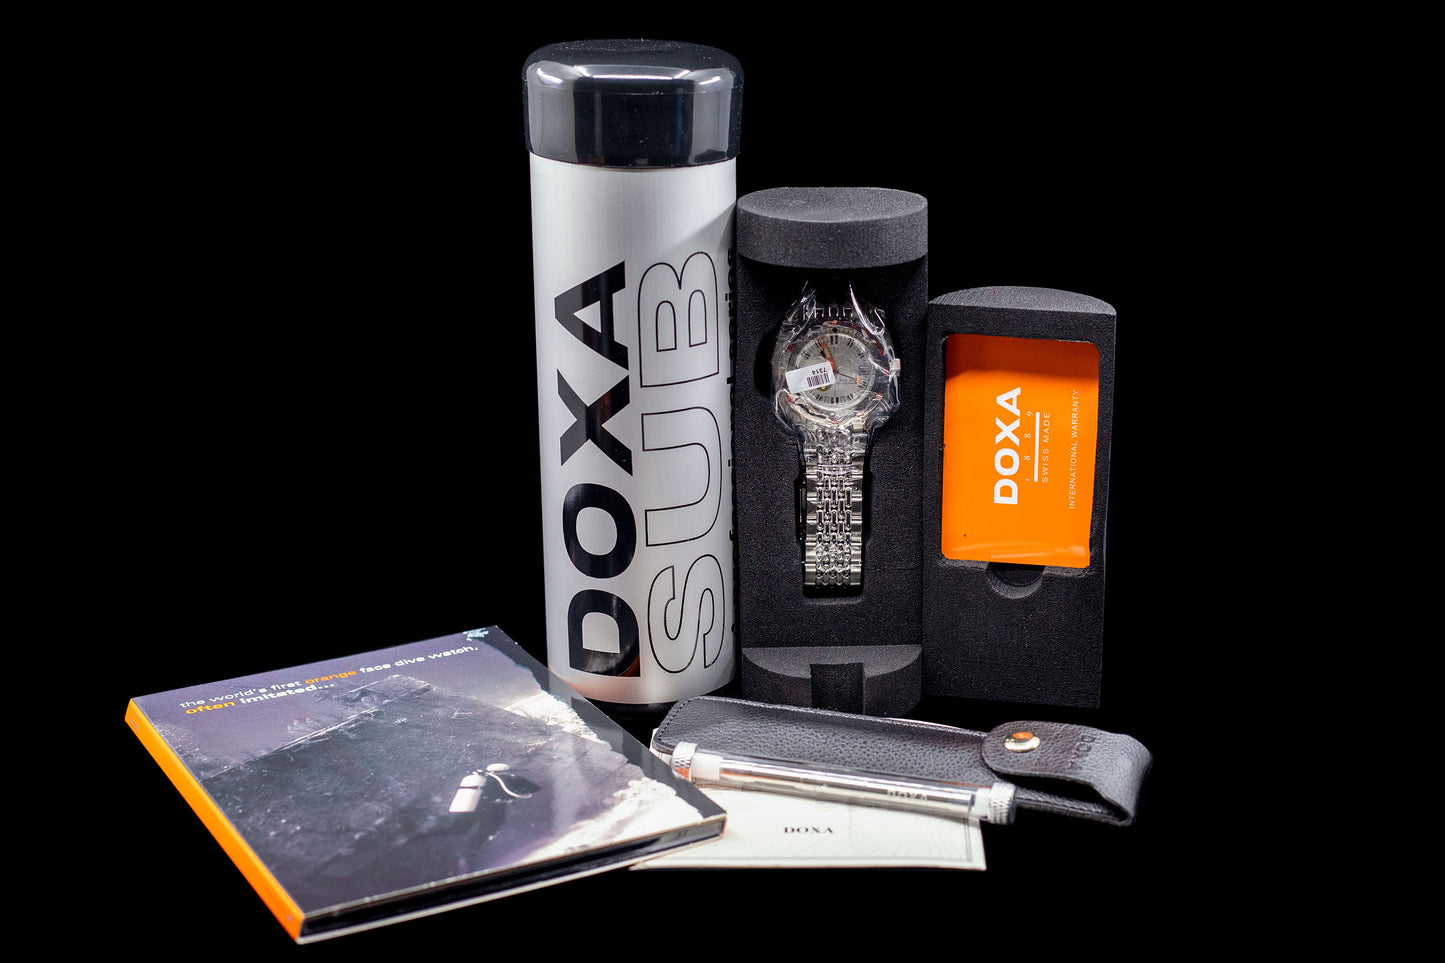 DOXA Sub 300 Searambler 'Blacklung' Reissue